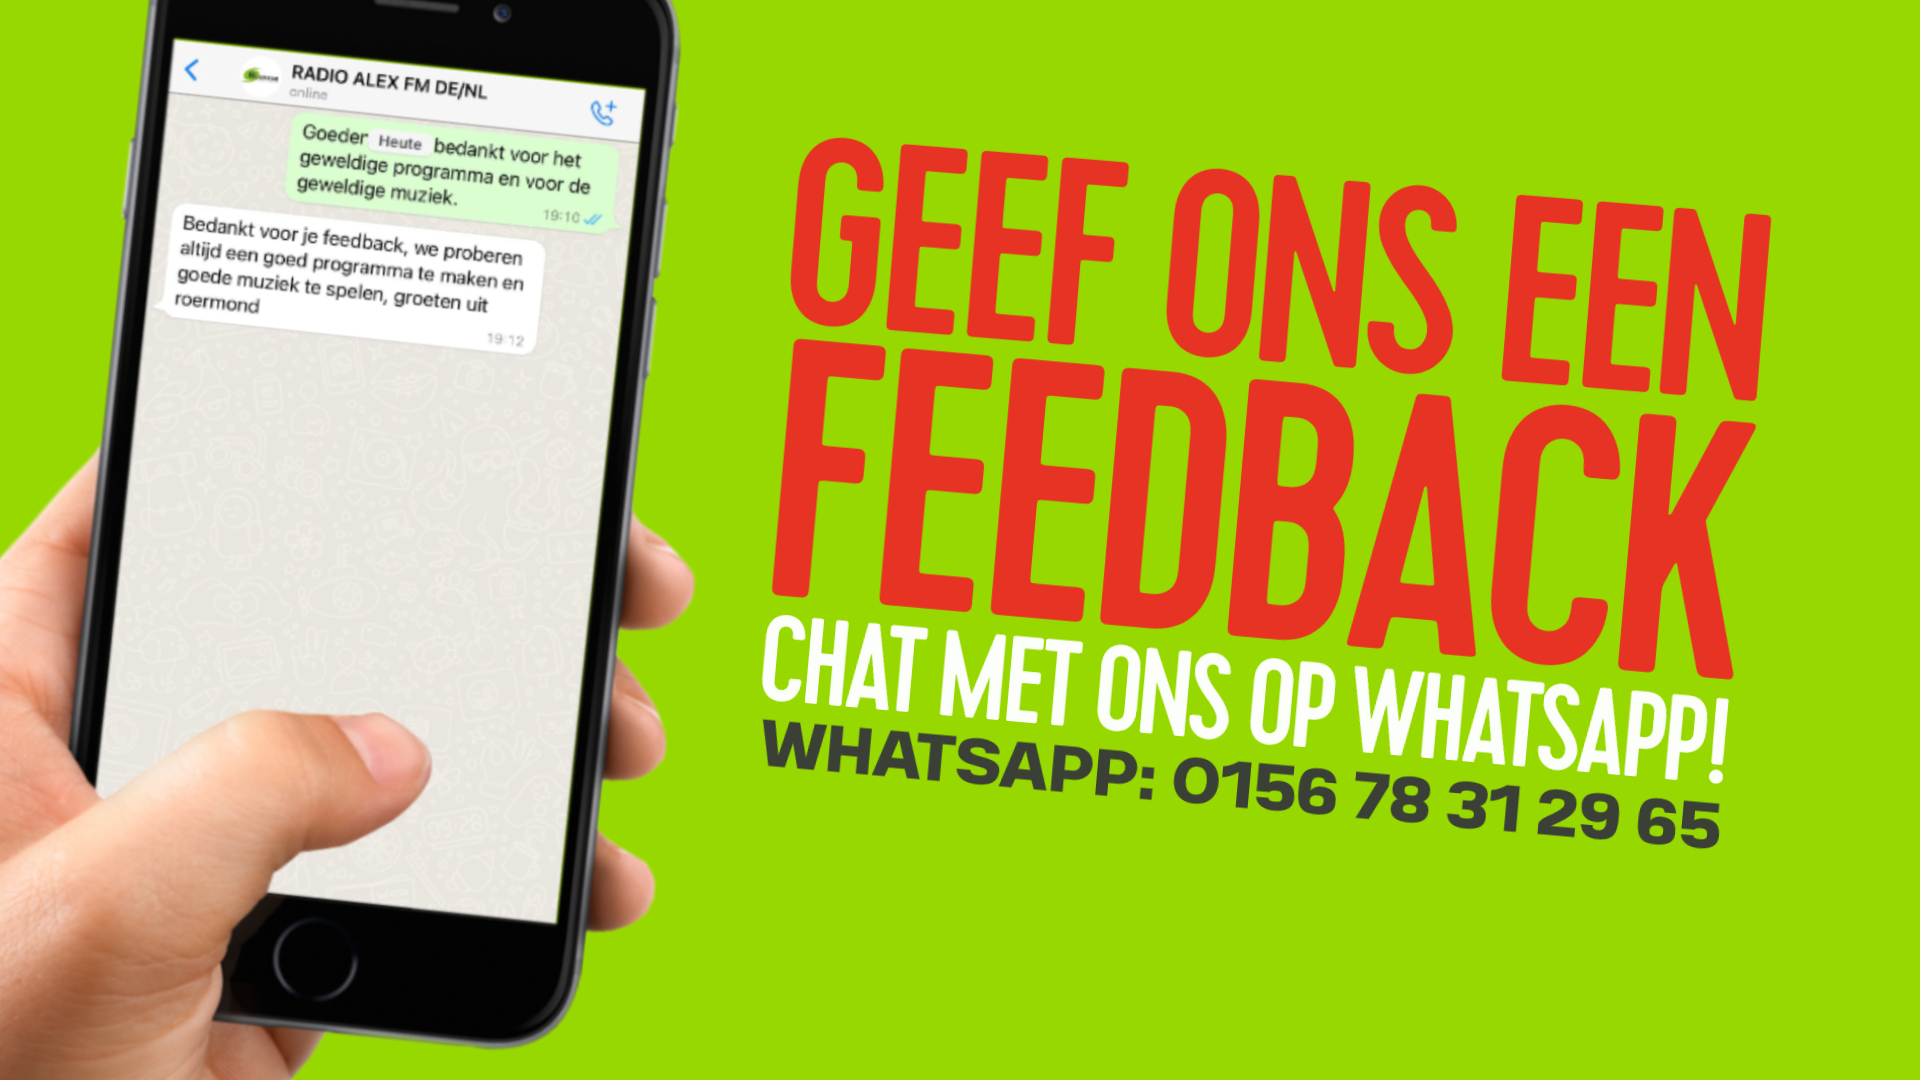 Geef ons een Feedback via WhatsApp!